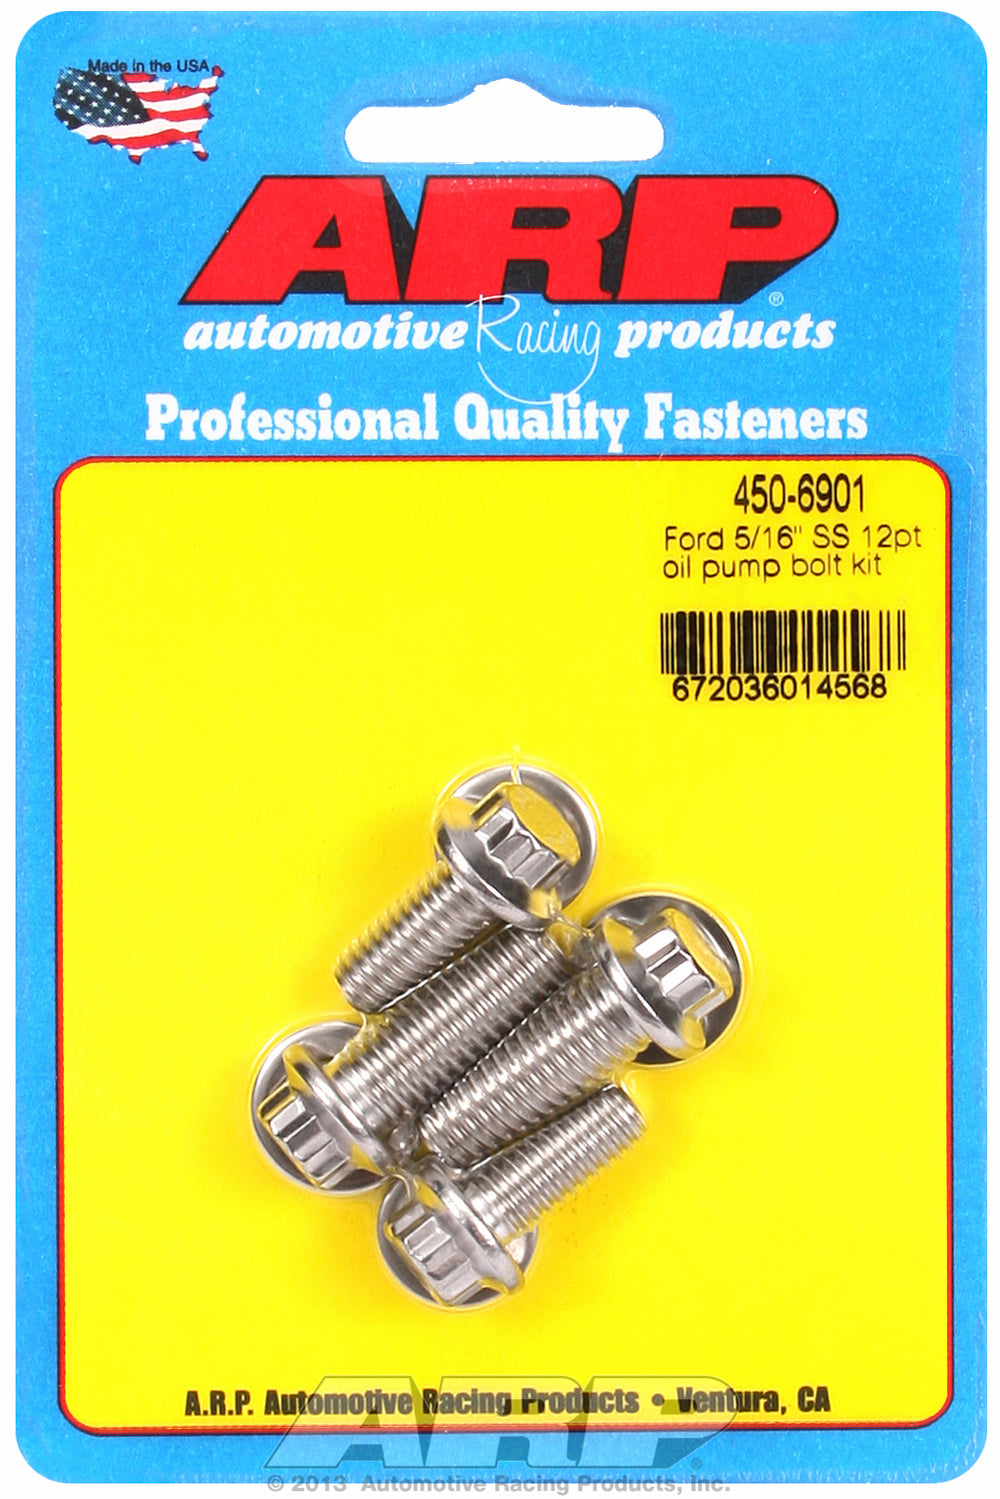 Oil Pump Bolt Kit for Ford 3/8˝ & 5/16˝ 4 piece bolt kit Stainless - 12-Pt Head